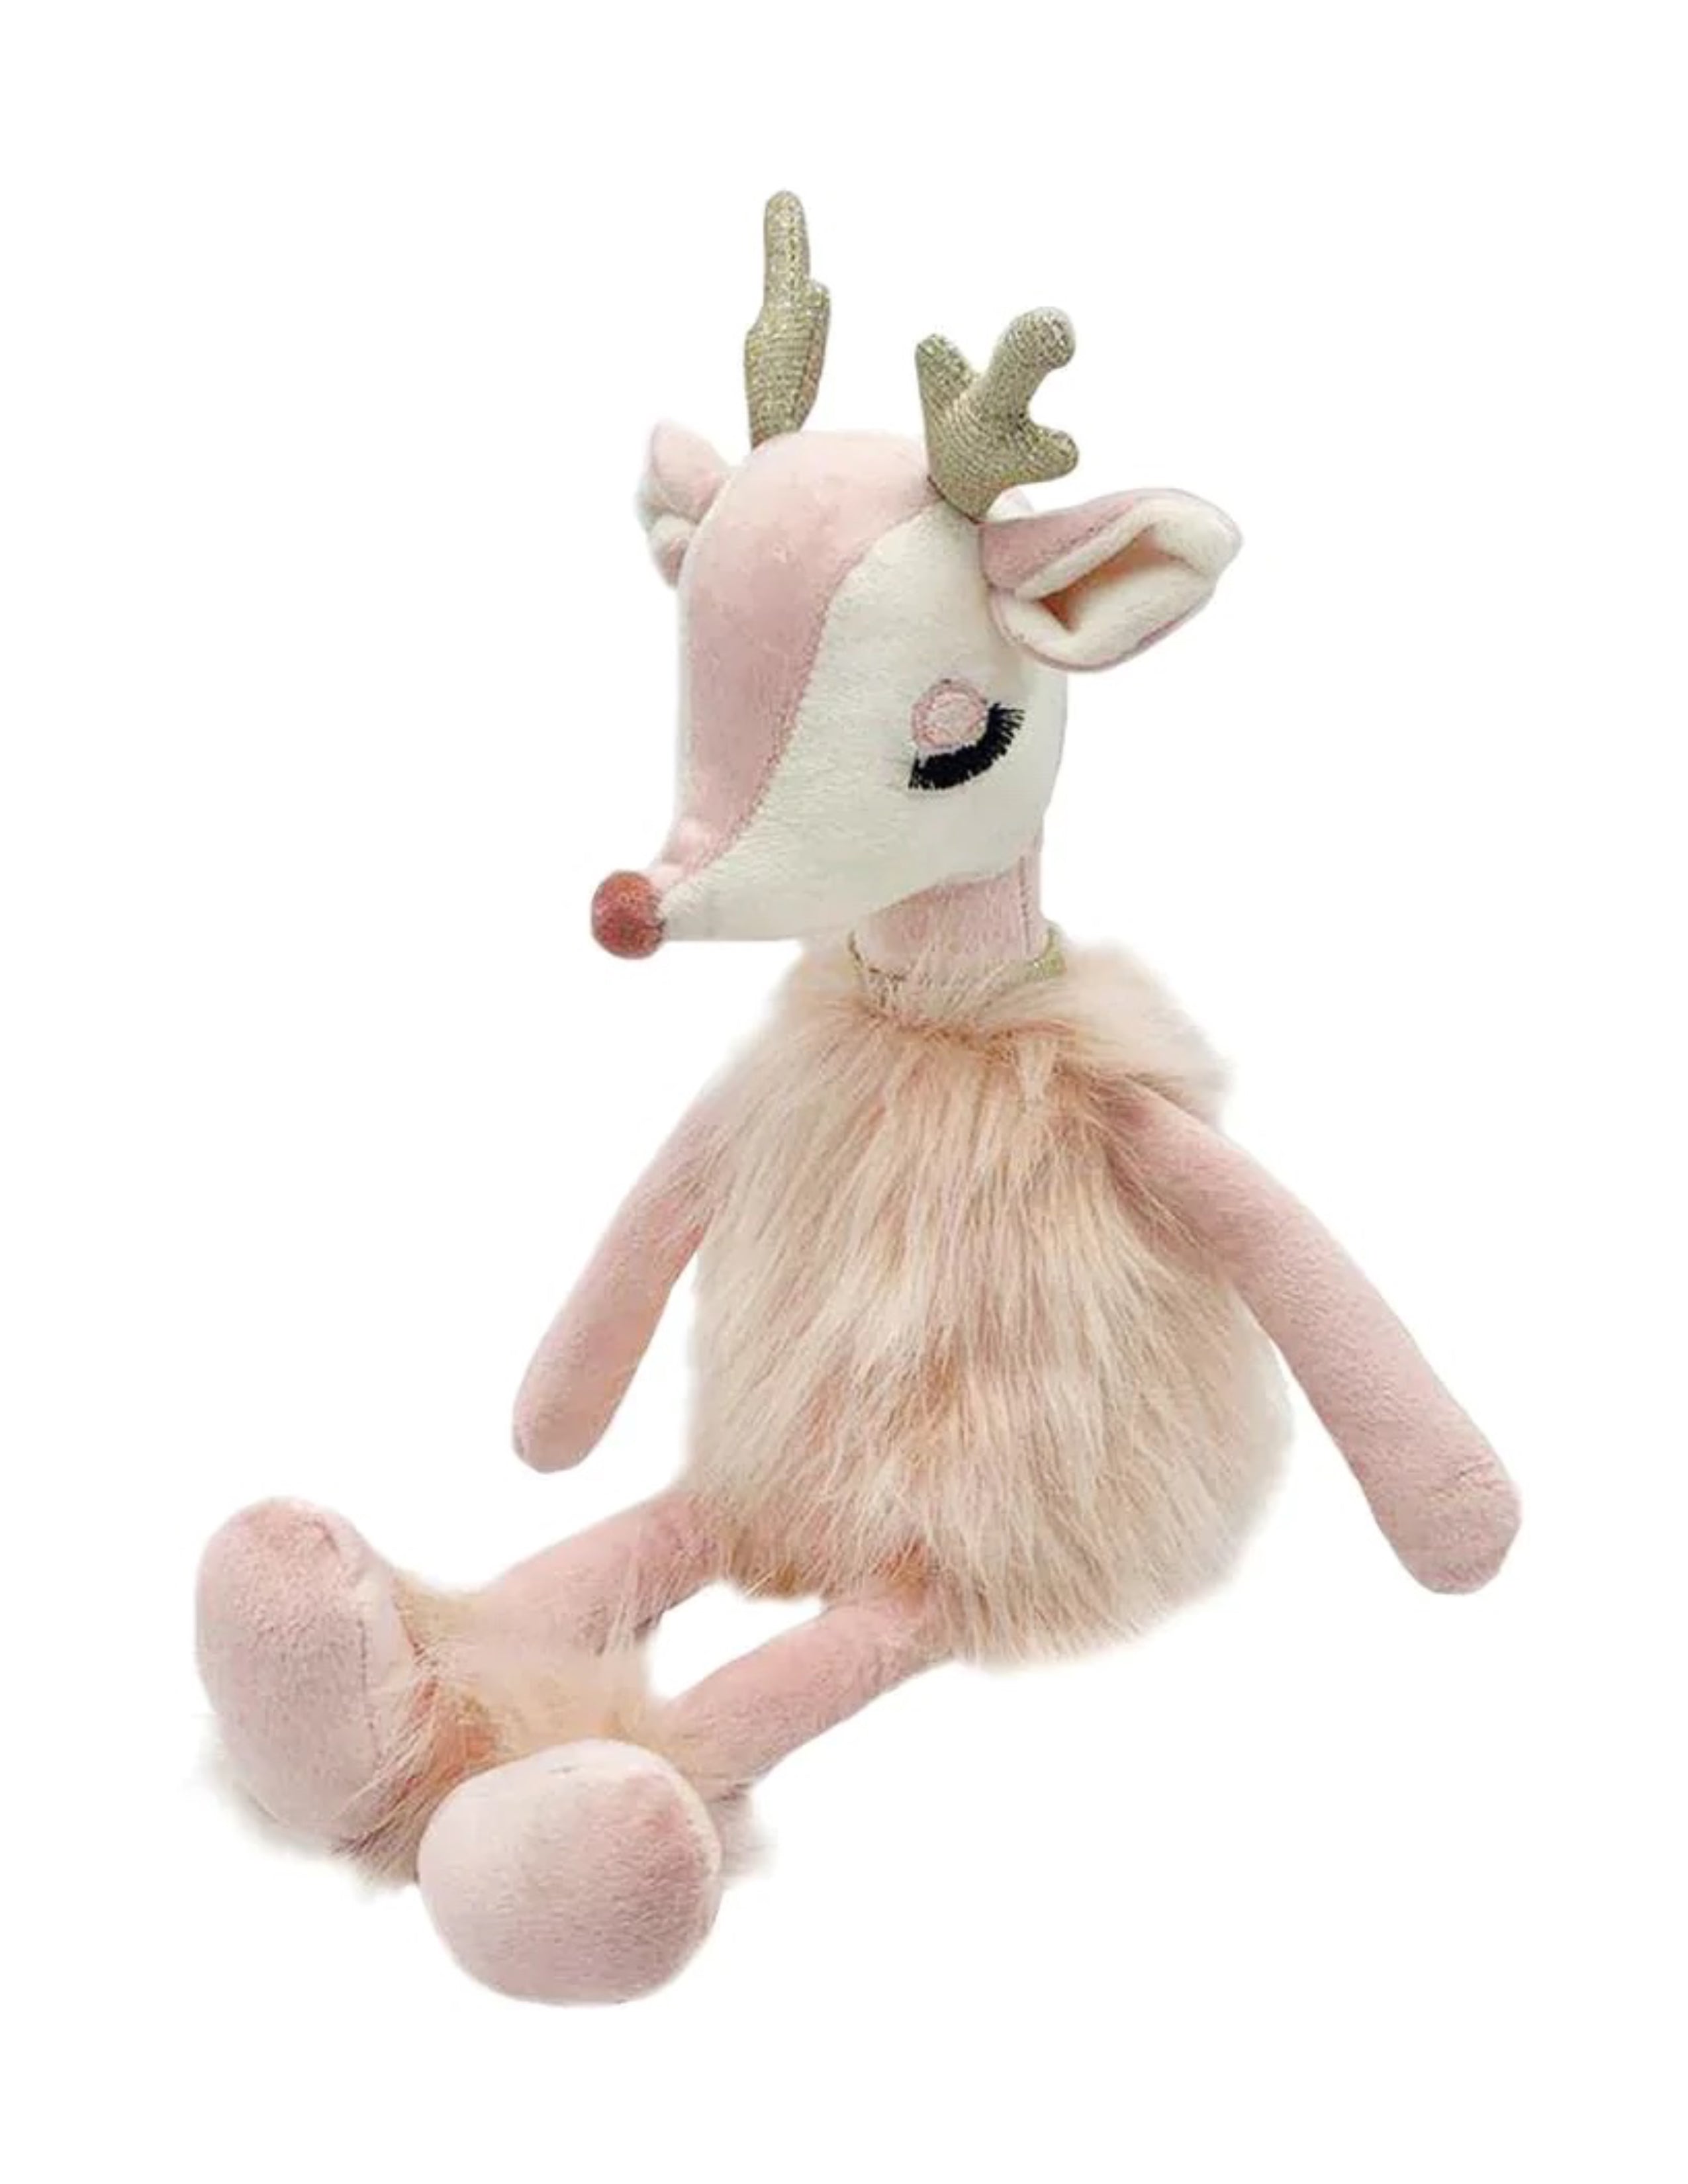 'Freija' The Pink Reindeer